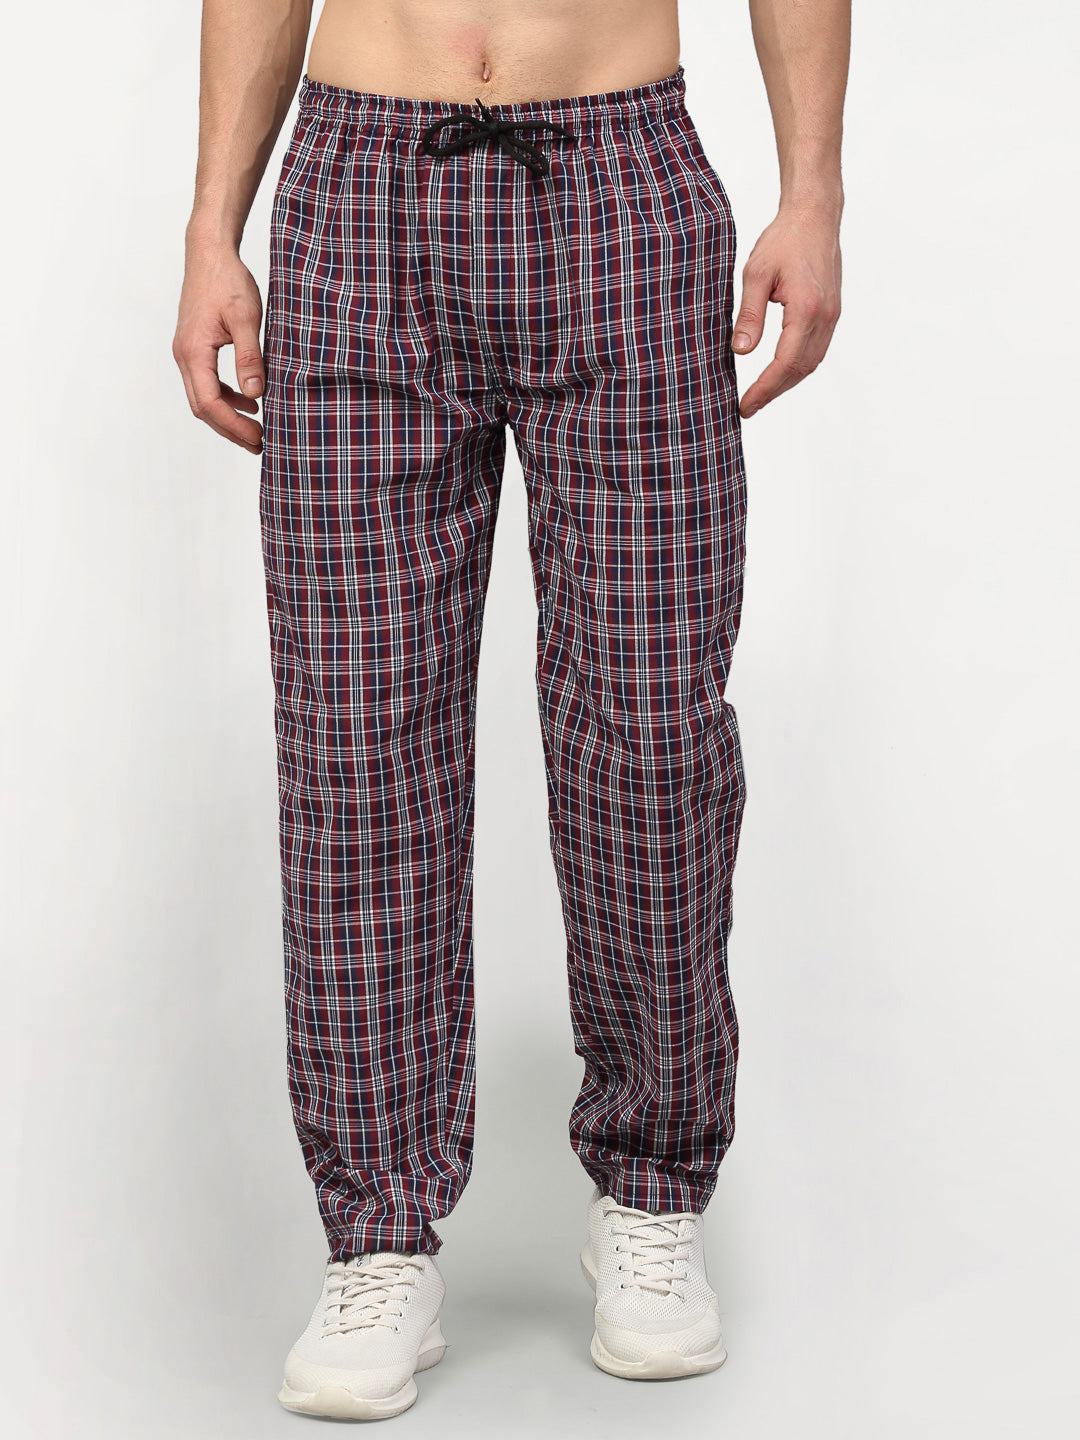 Men's Multicolor Cotton Checked Track Pants ( JOG 019Multi ) - Jainish